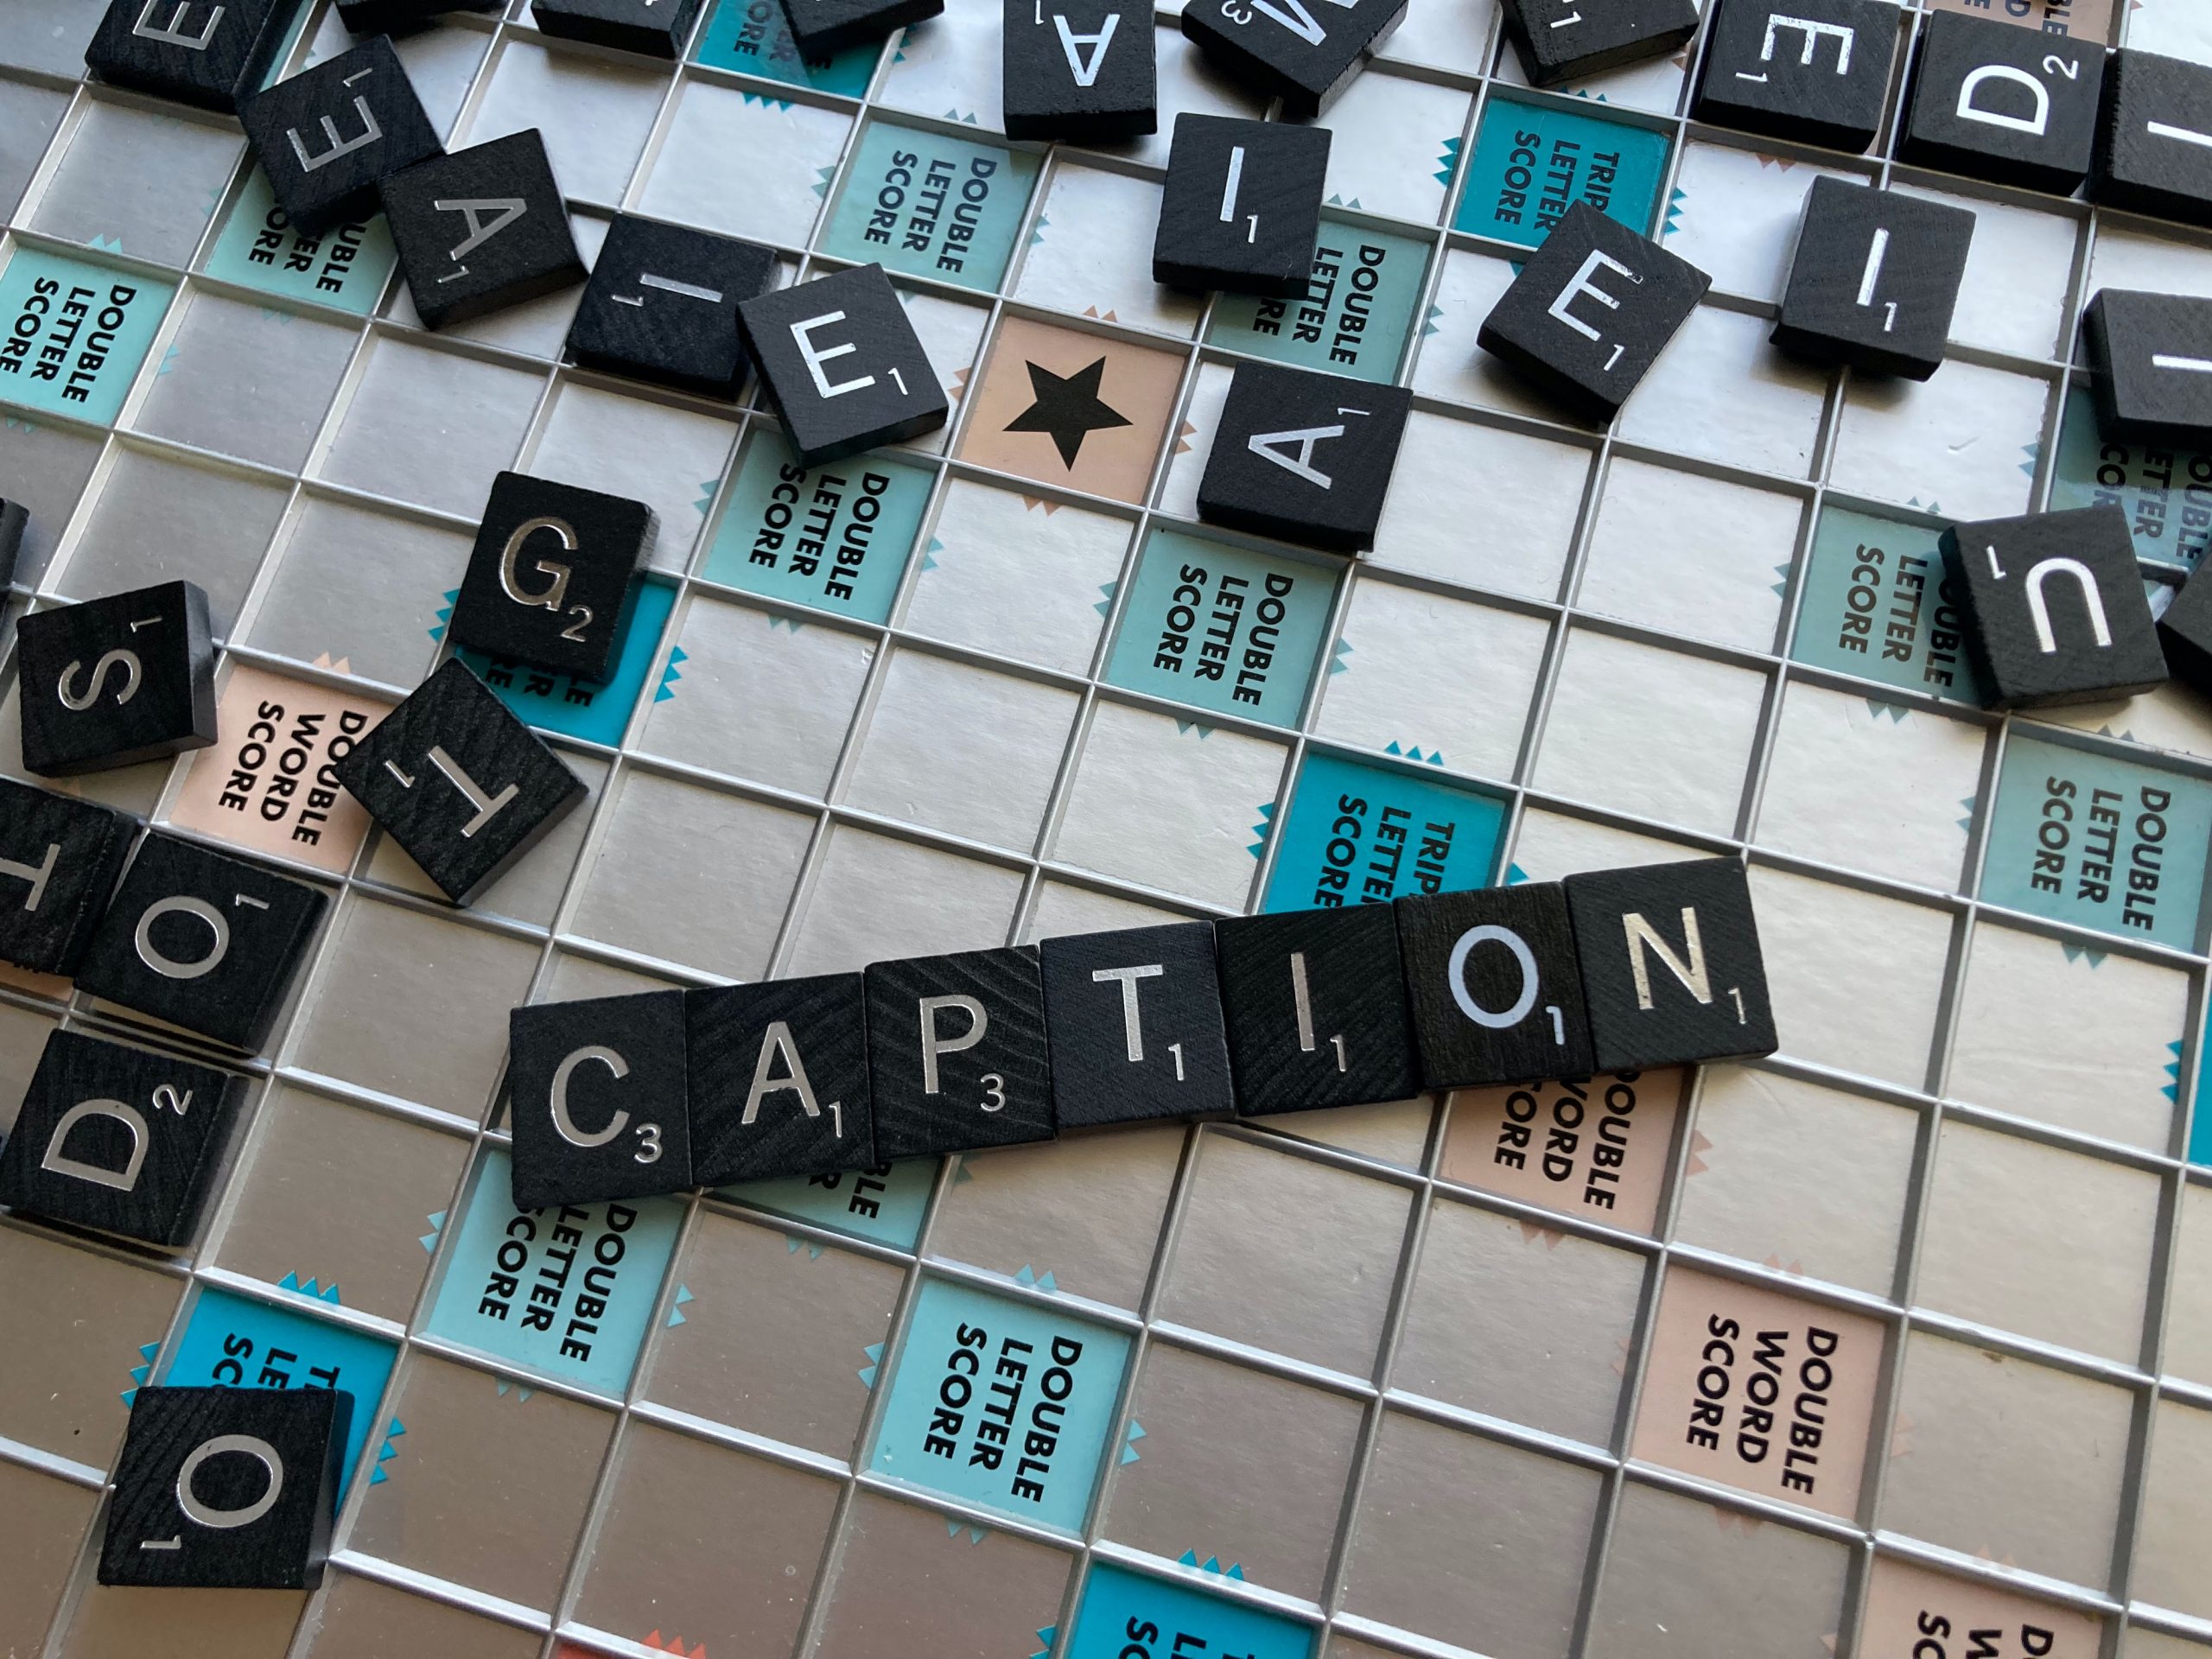 Scrabble board spelling out CAPTION